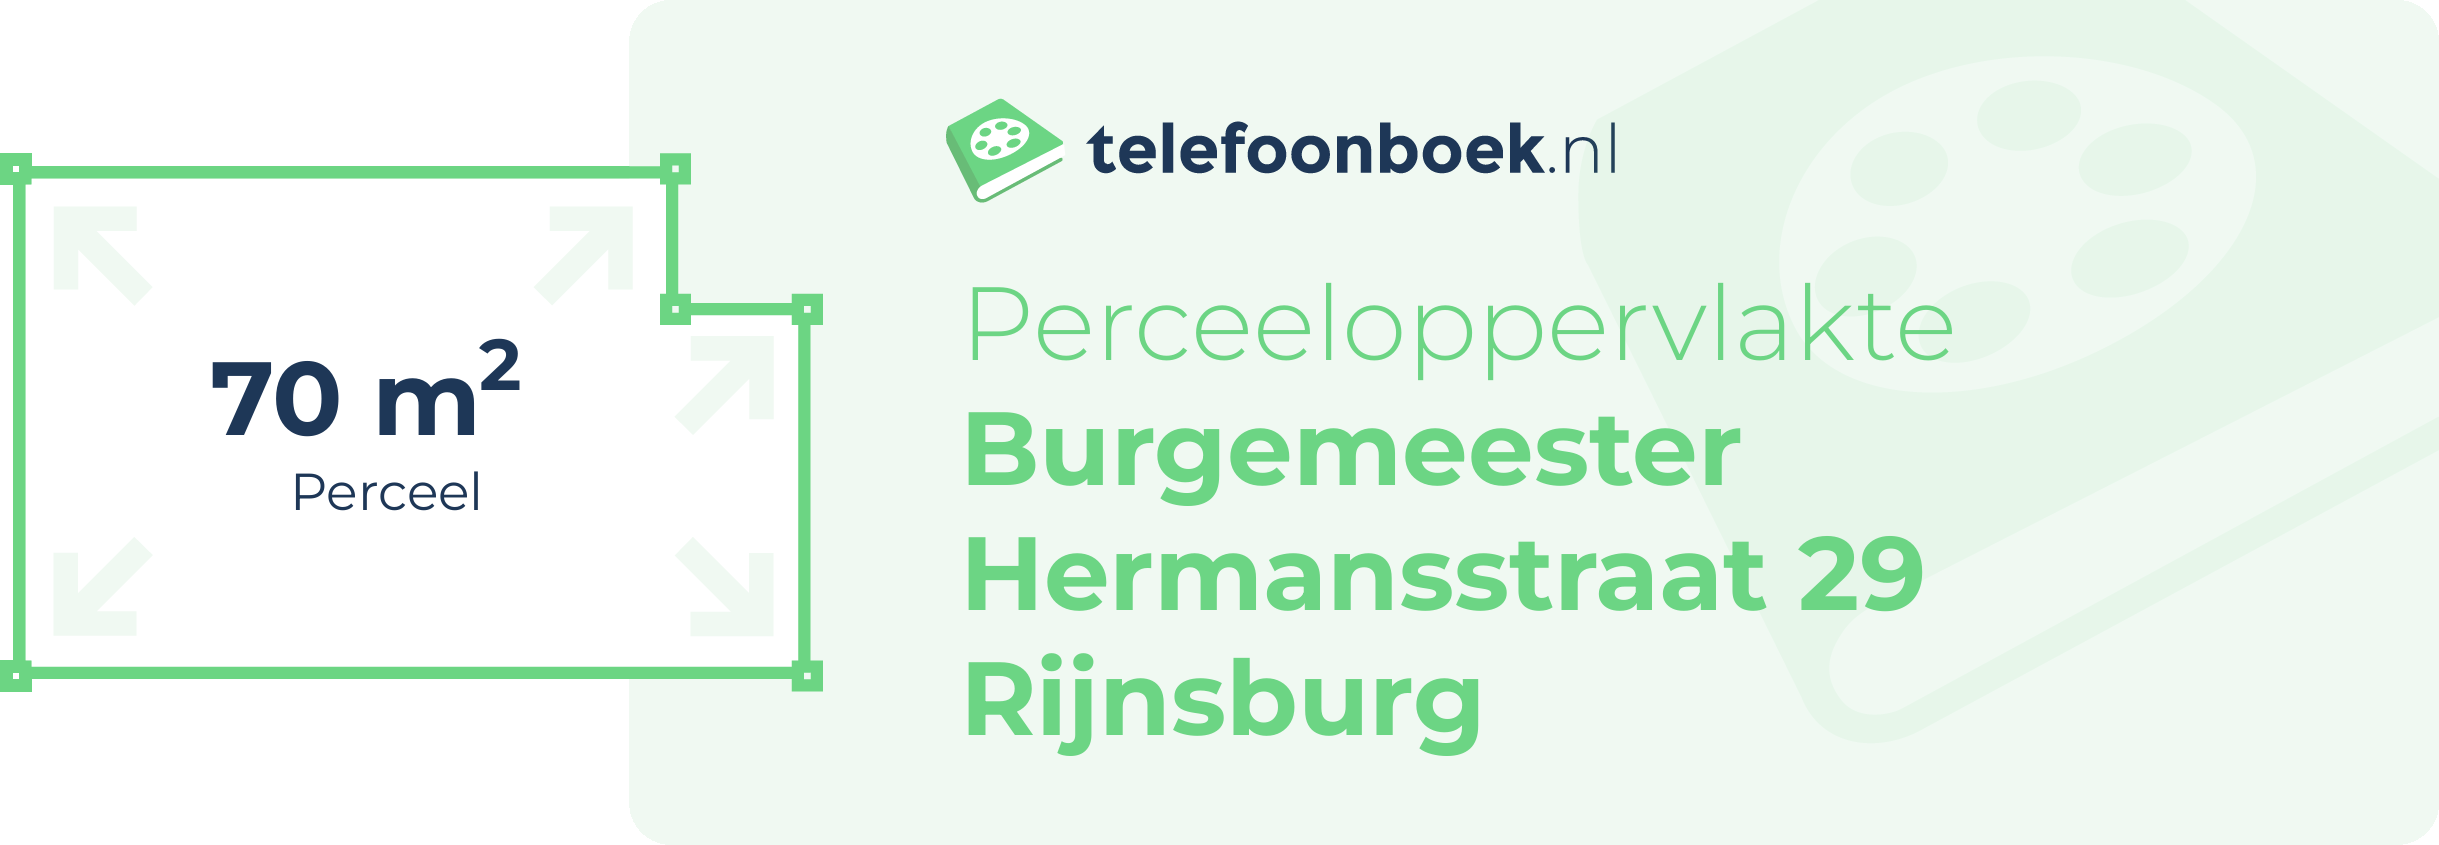 Perceeloppervlakte Burgemeester Hermansstraat 29 Rijnsburg